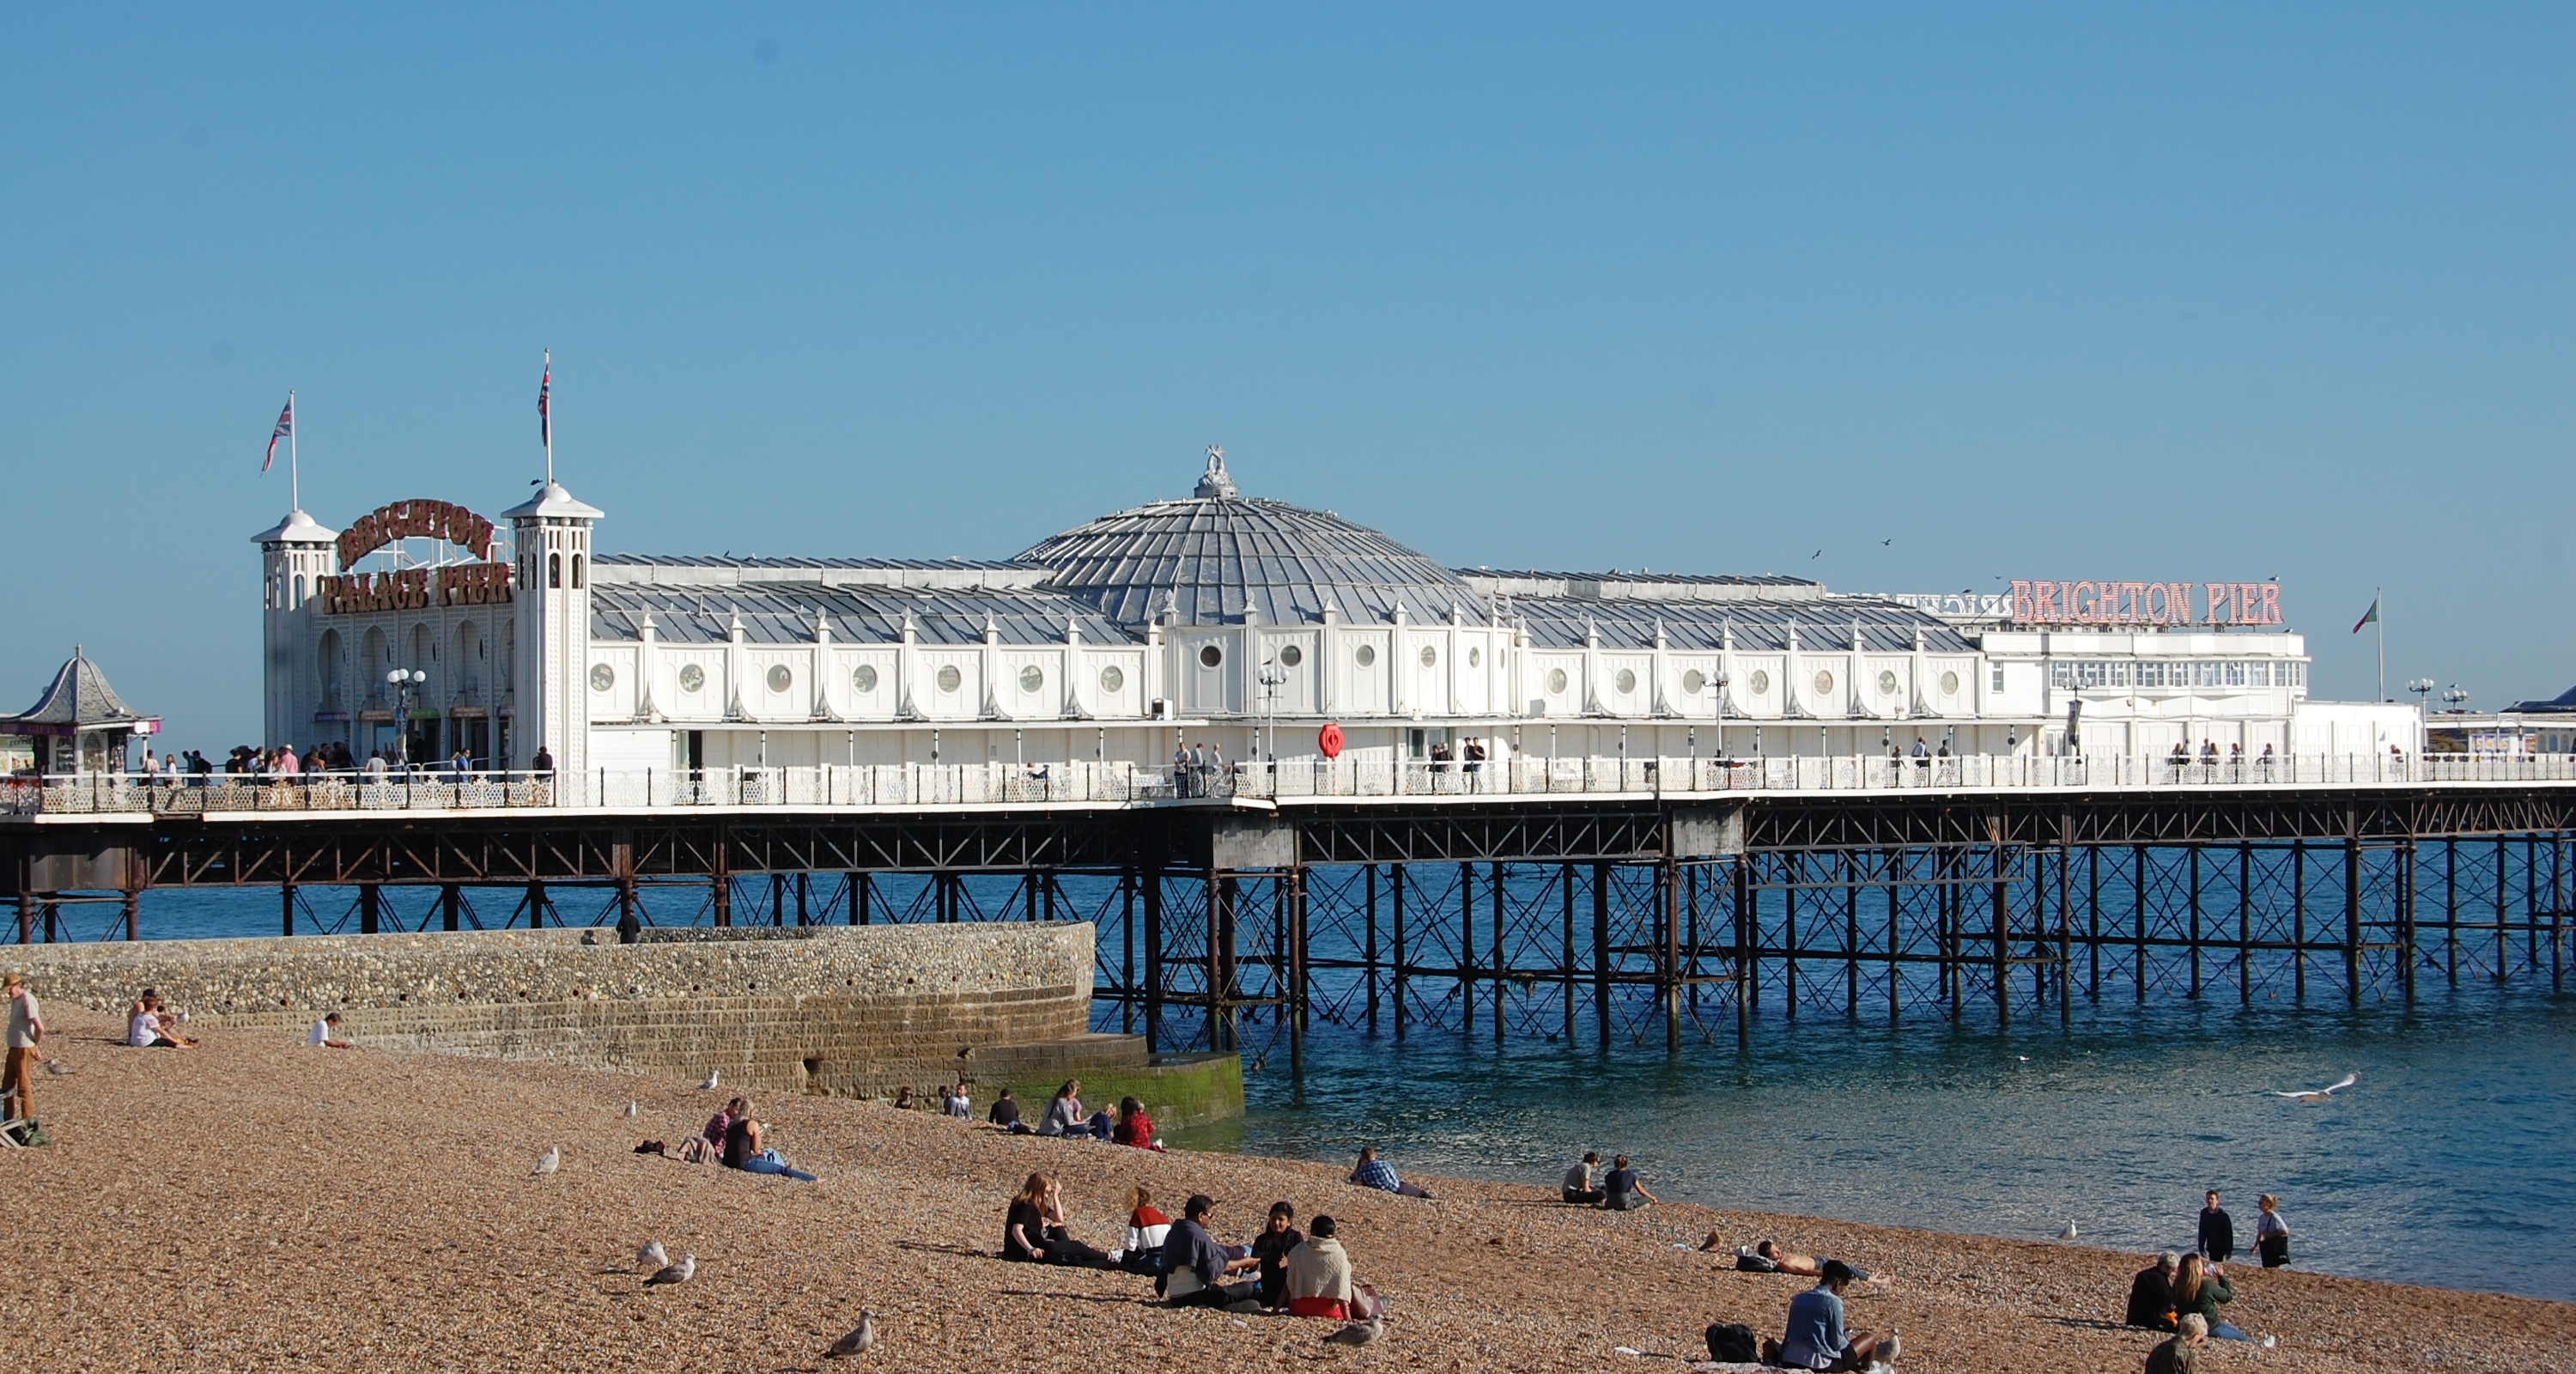 Brighton photo